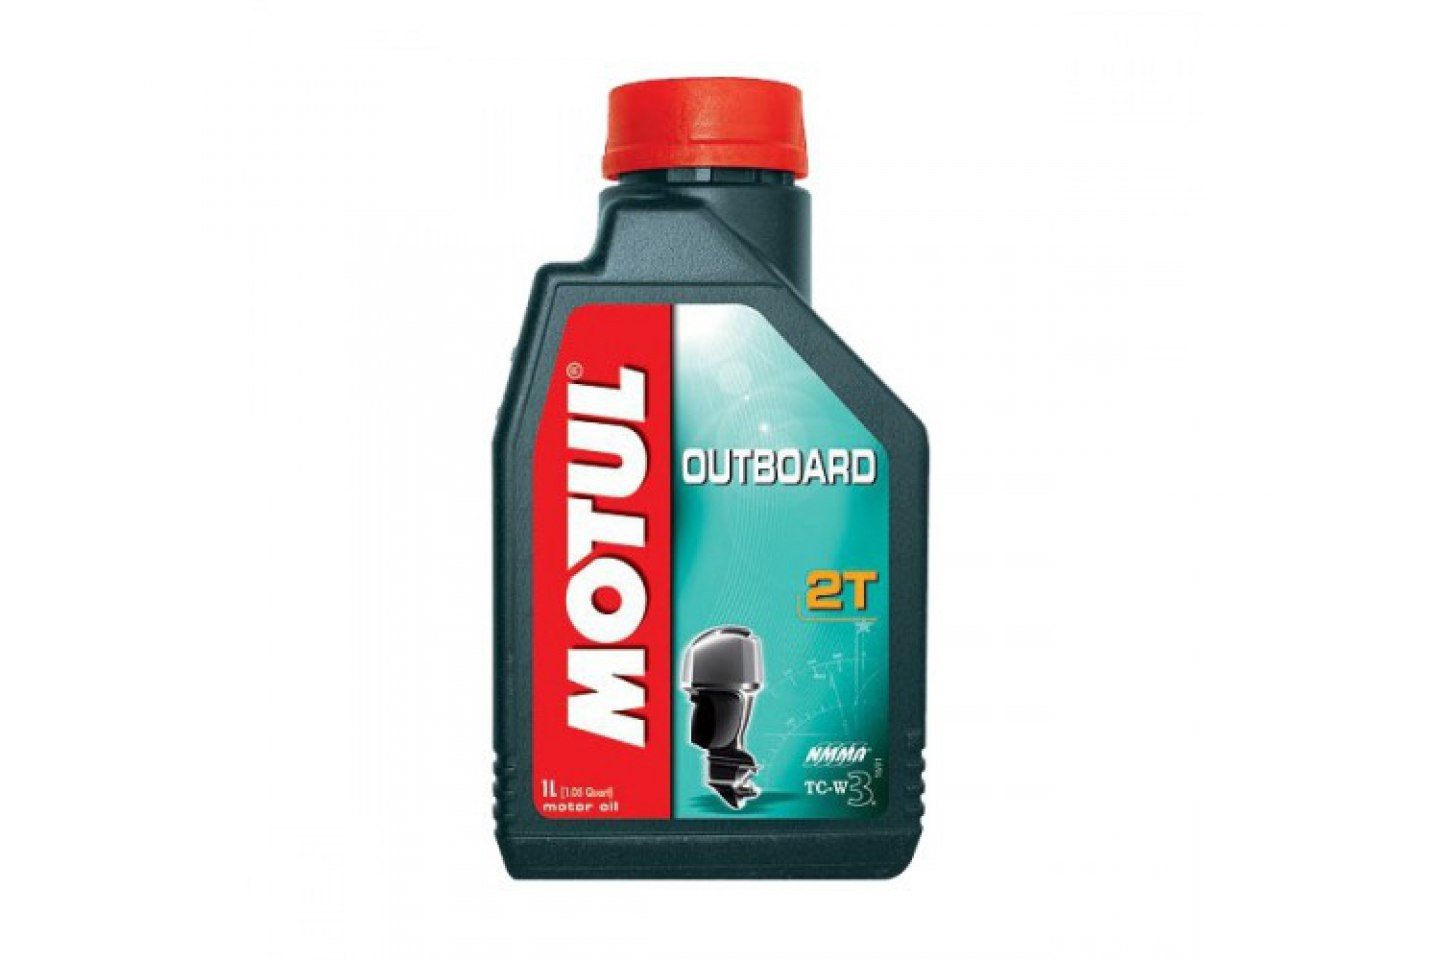 Как выглядит Motul Outboard 2T